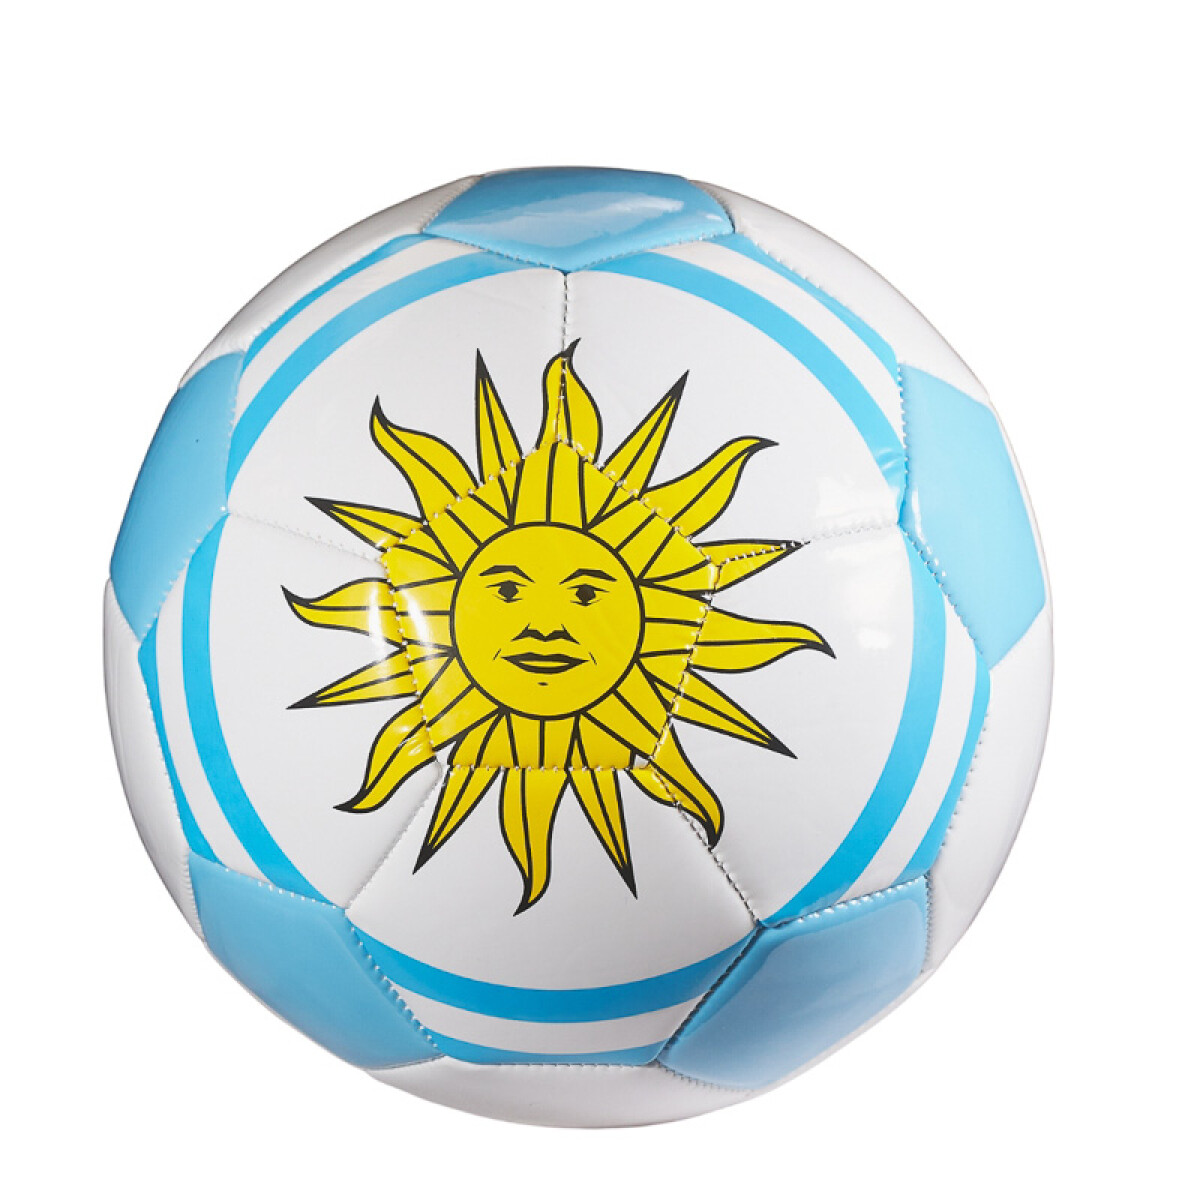 Pelota para futbol de cuero Nº5 - Uruguay 